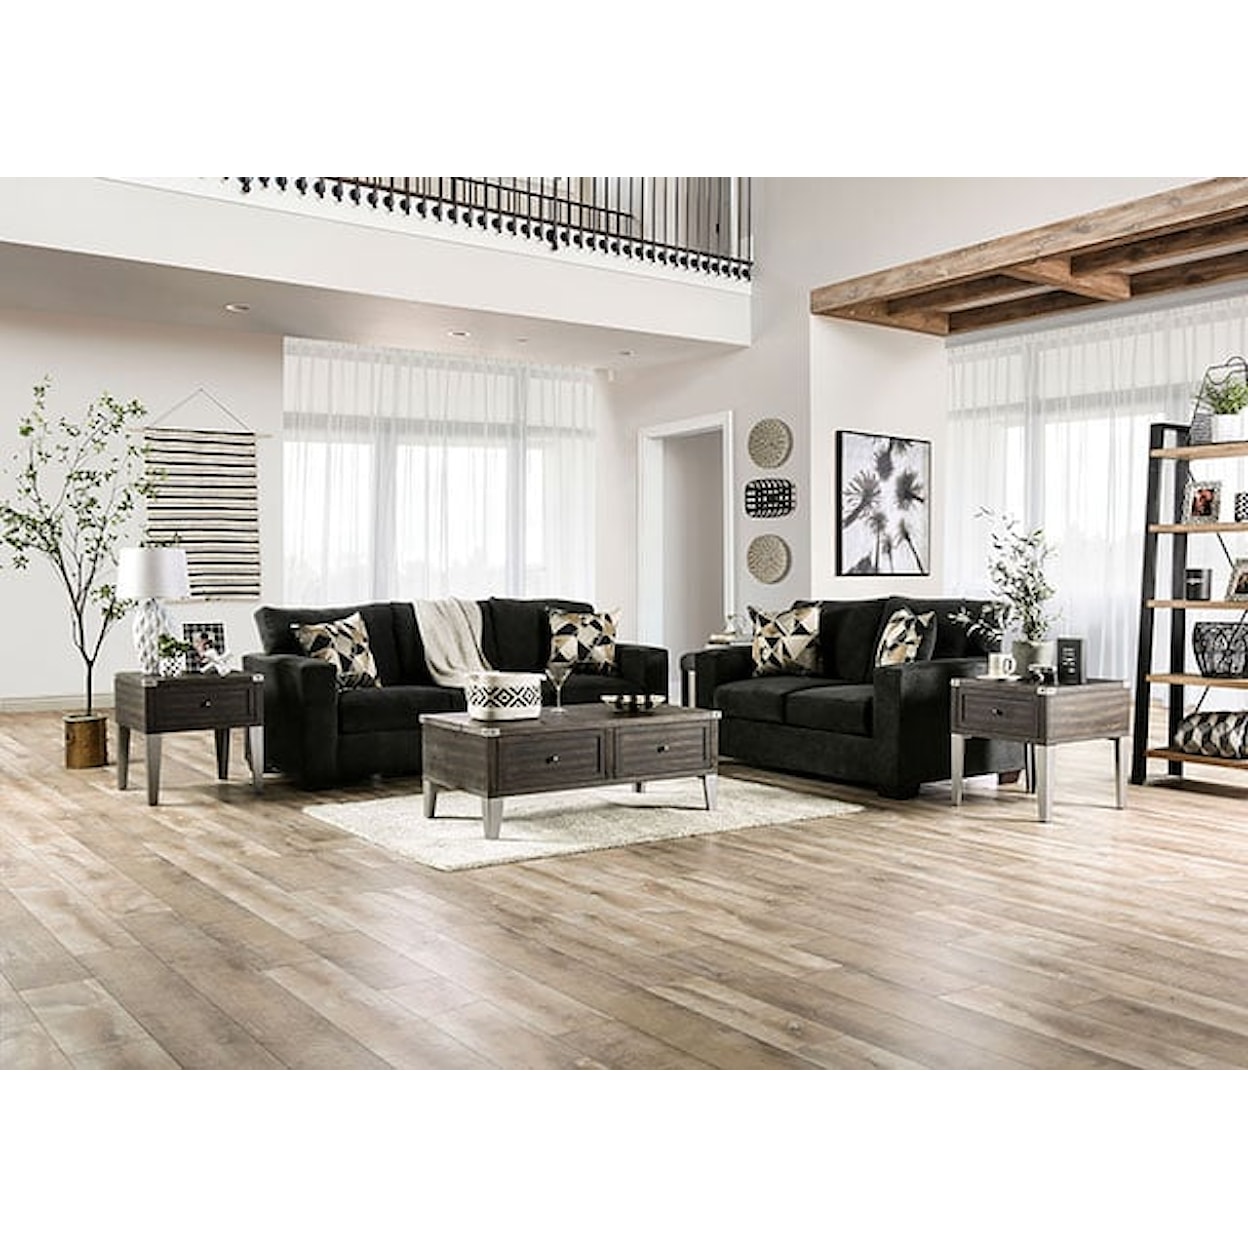 Furniture of America Heathway Sofa